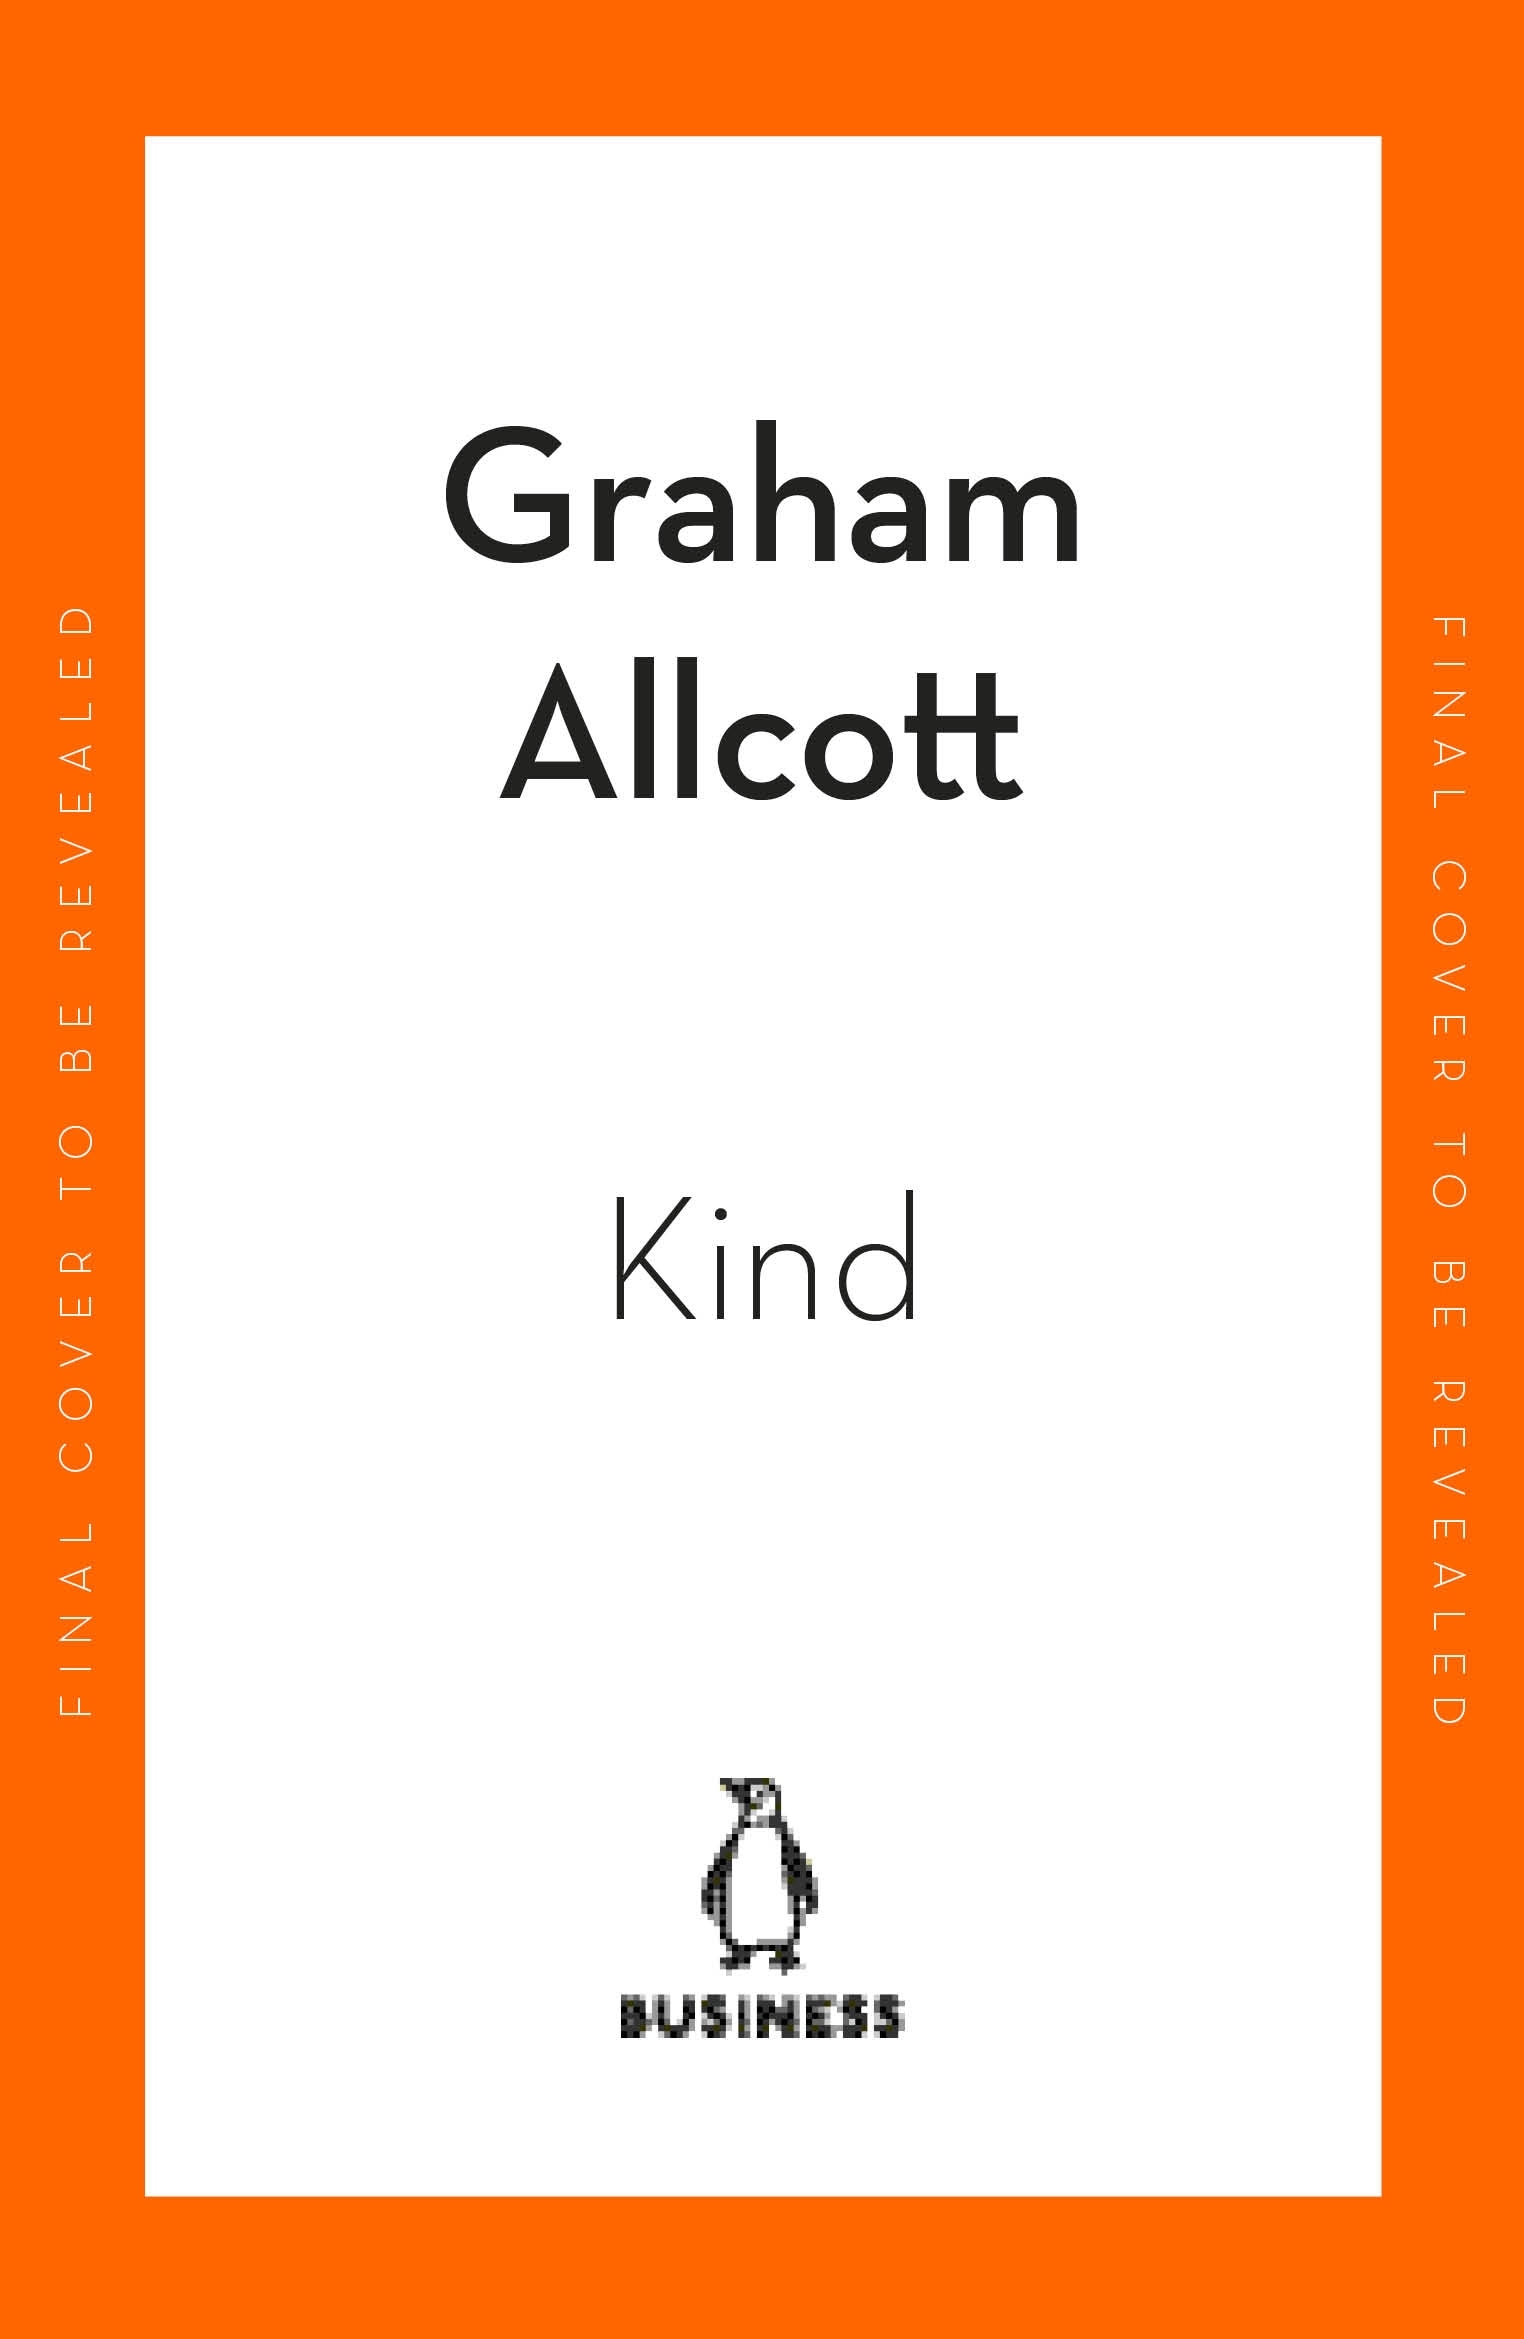 Book “Kind” by Graham Allcott — March 16, 2023